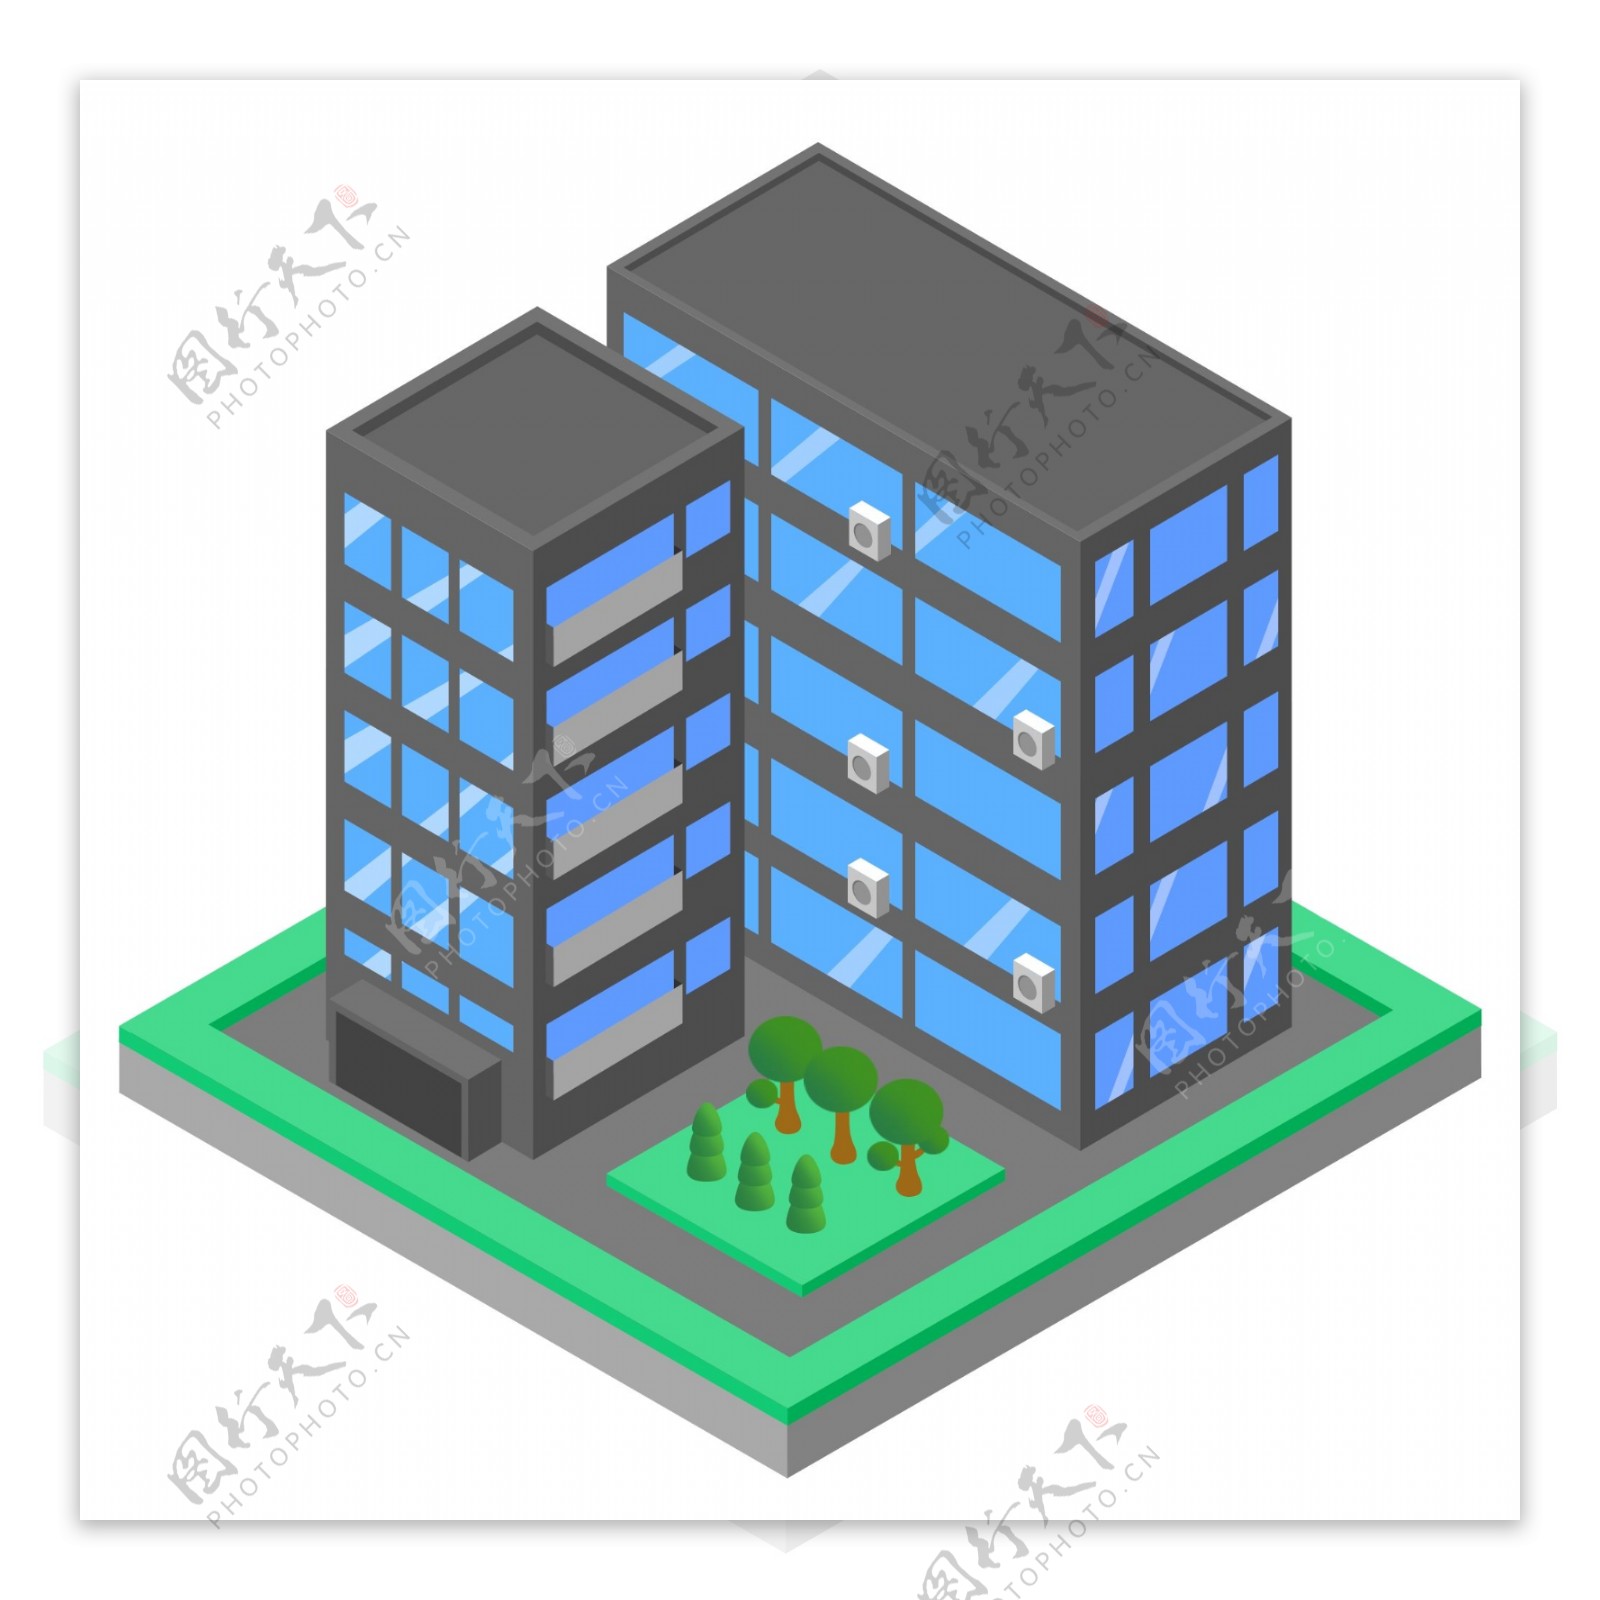 2.5D立体城市居民楼小区建筑元素可商用